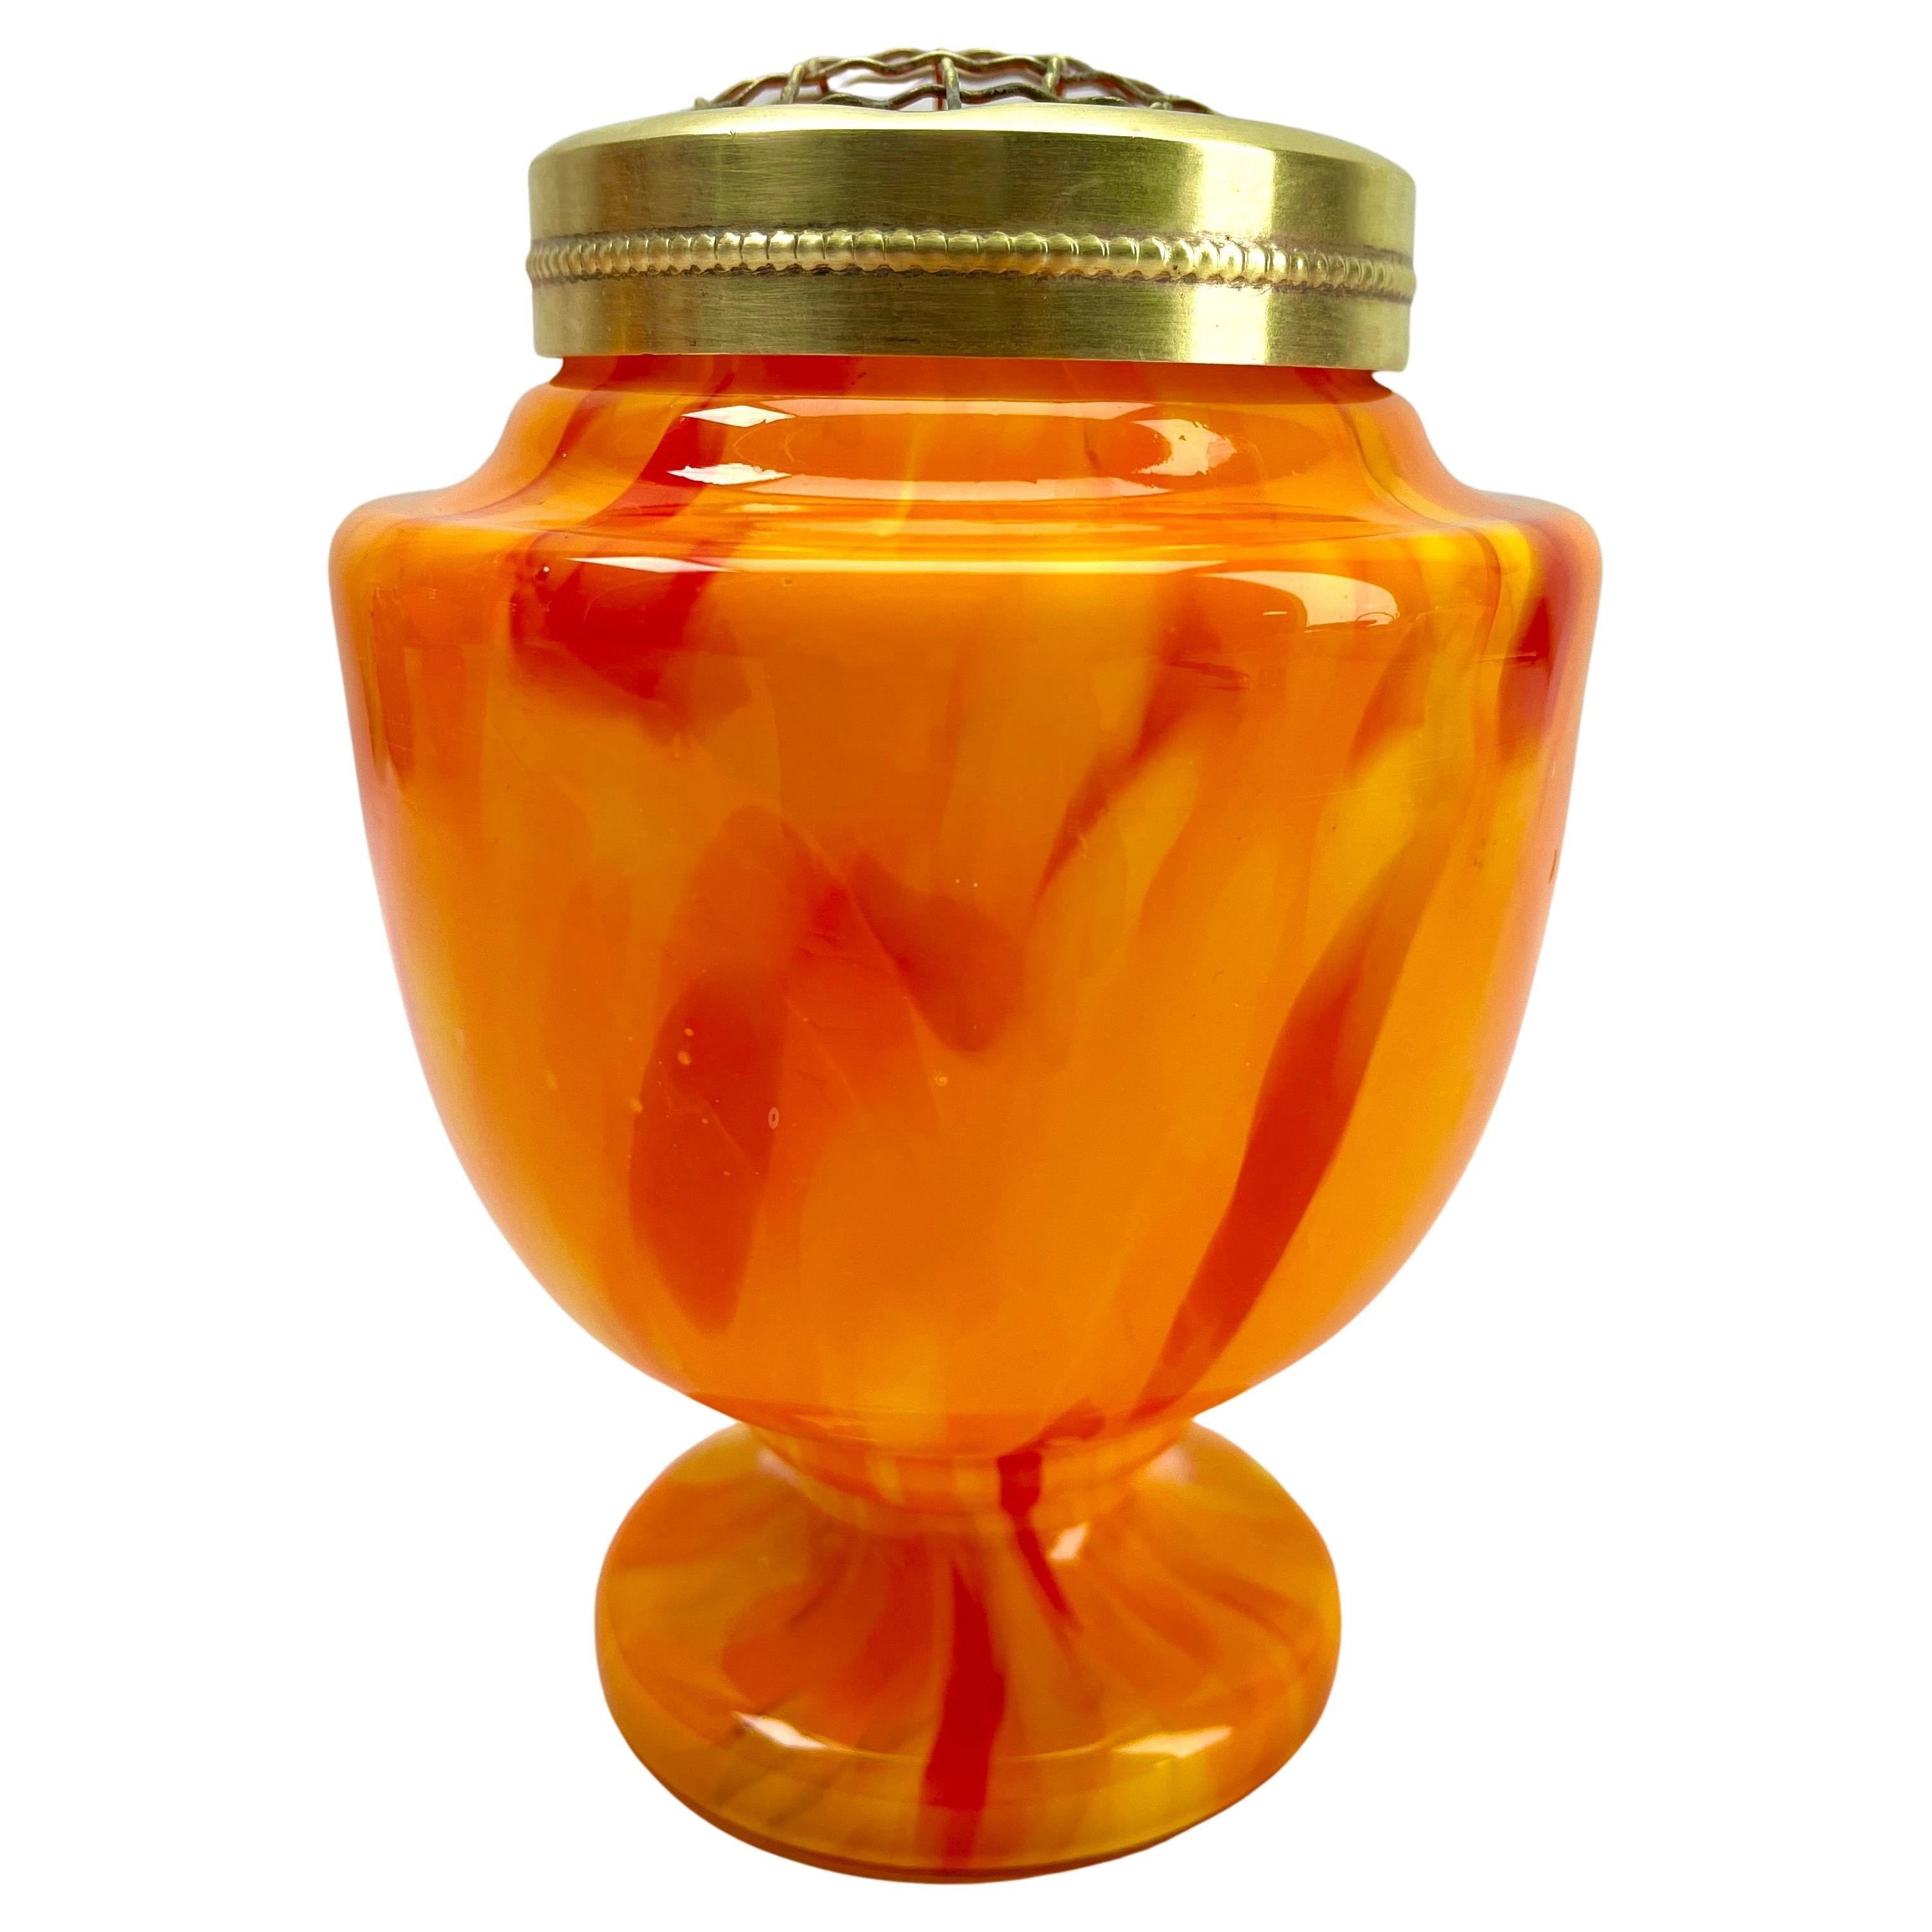 'Pique Fleurs'  Vase, in Multi Color Orange Decor with Grille, Late 1930s For Sale